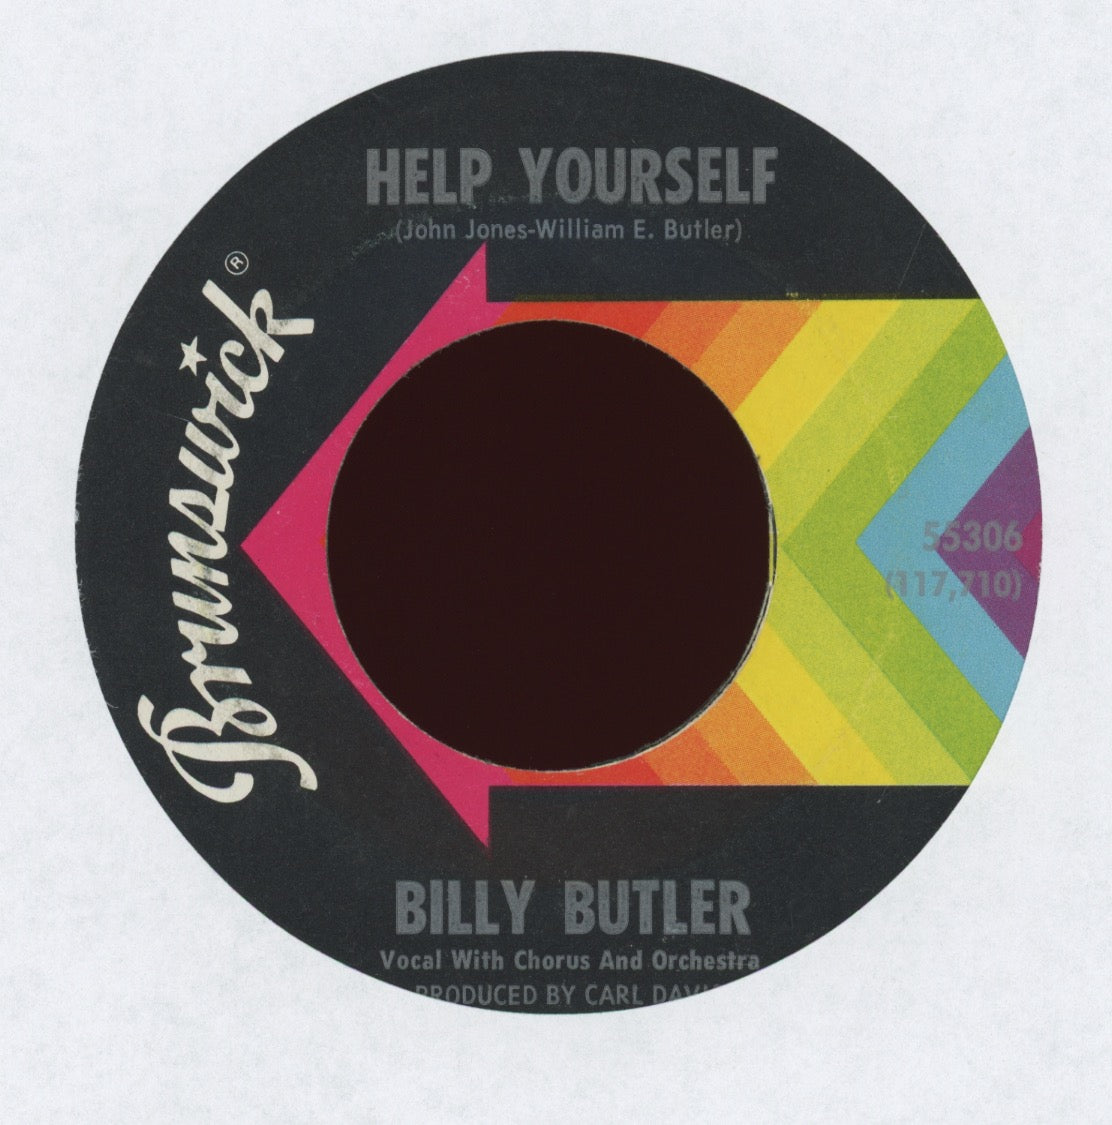 Billy Butler - Help Yourself on Brunswick